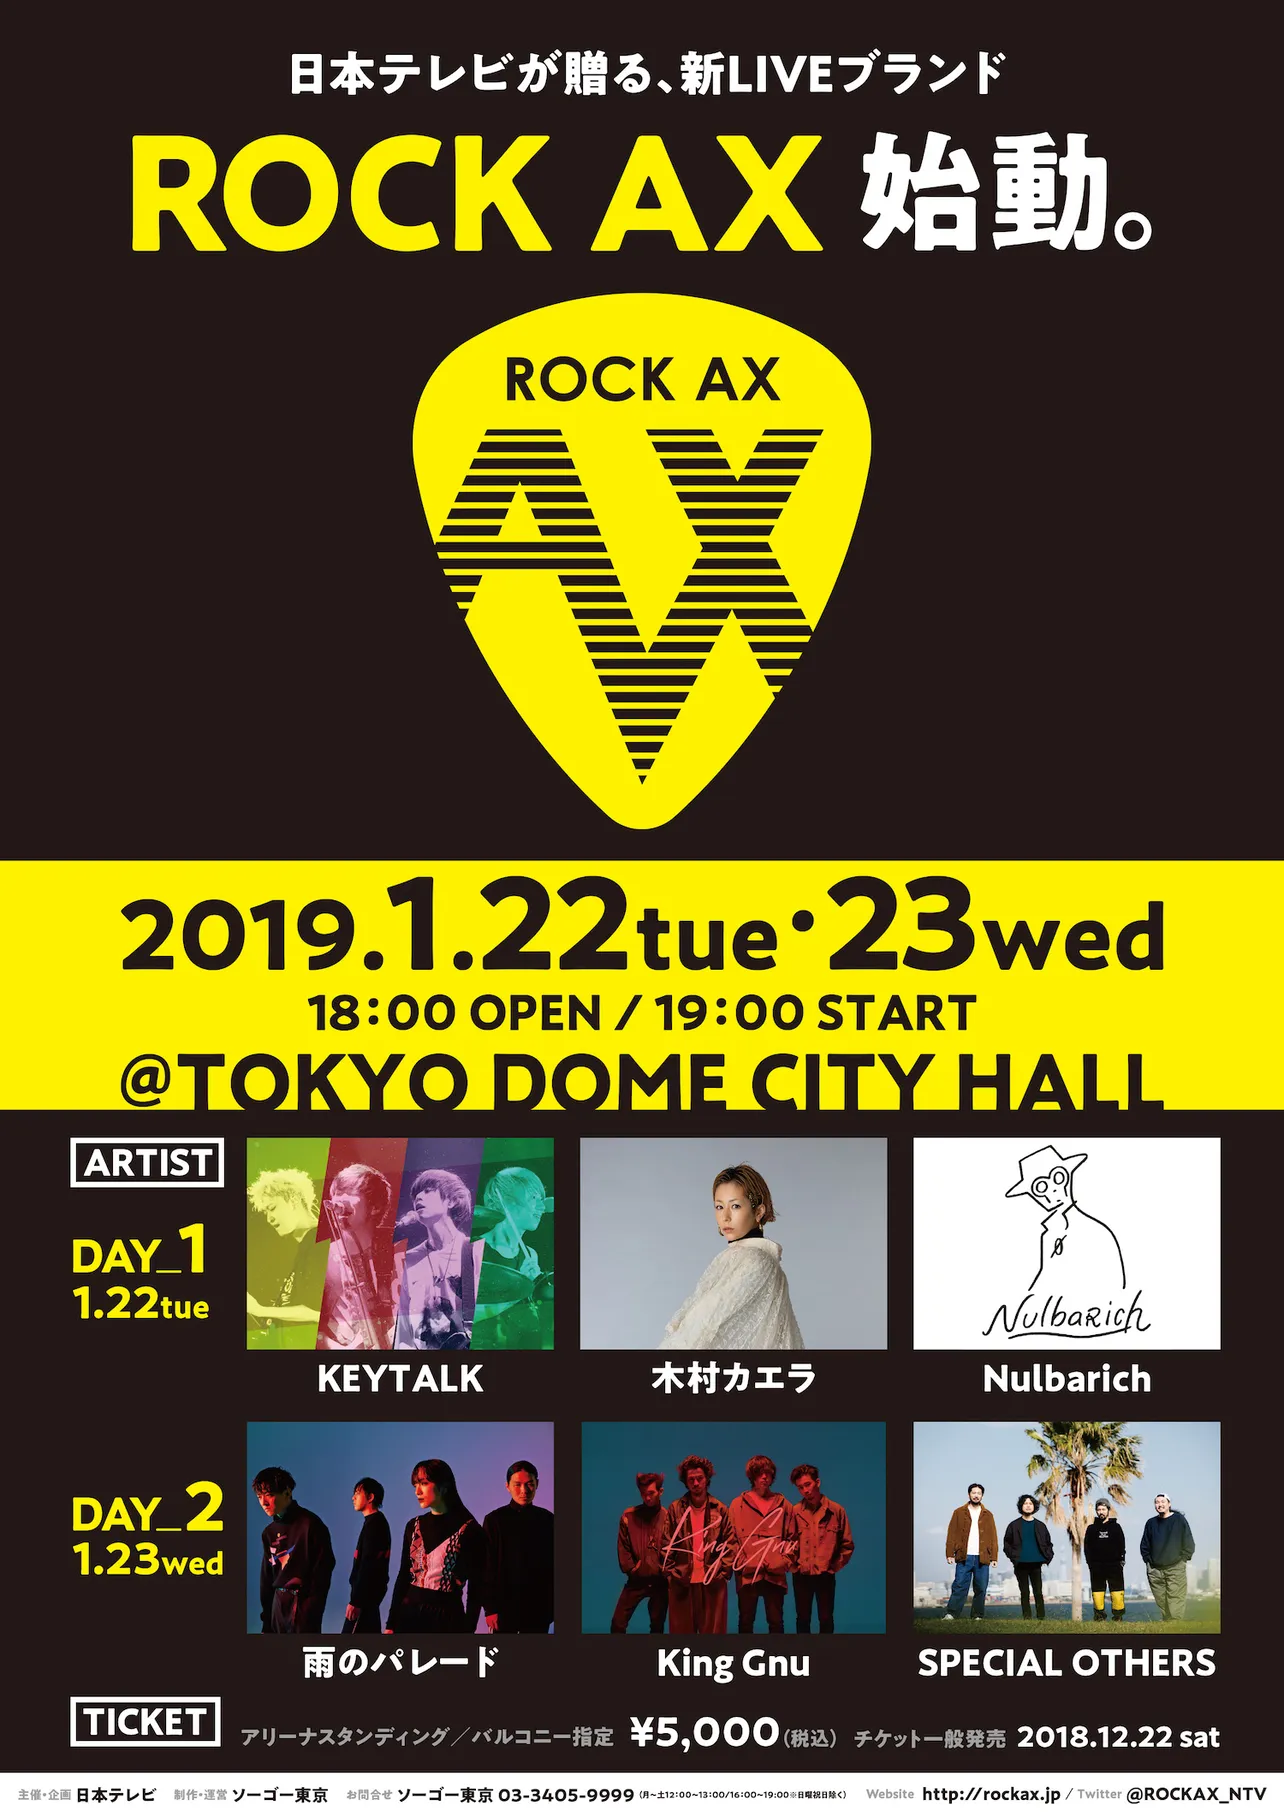 「ROCK AX Vol.1」 は2019年1月22日(火)・23日(水)に東京・TOKYO DOME CITY HALLにて開催